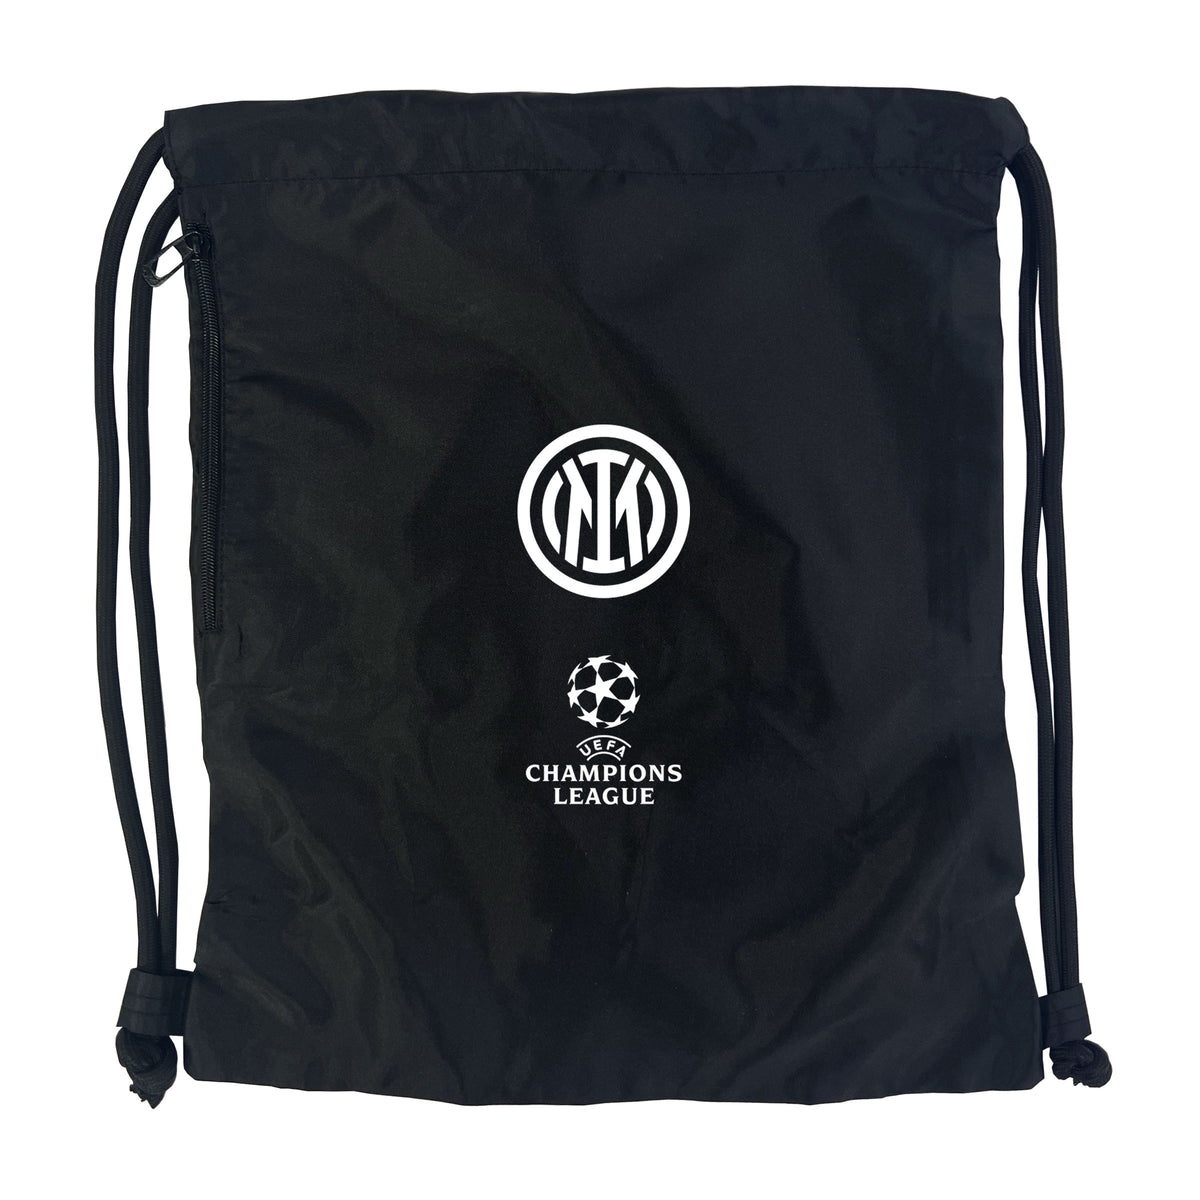 Champions League Inter Milan Gym Bag Black